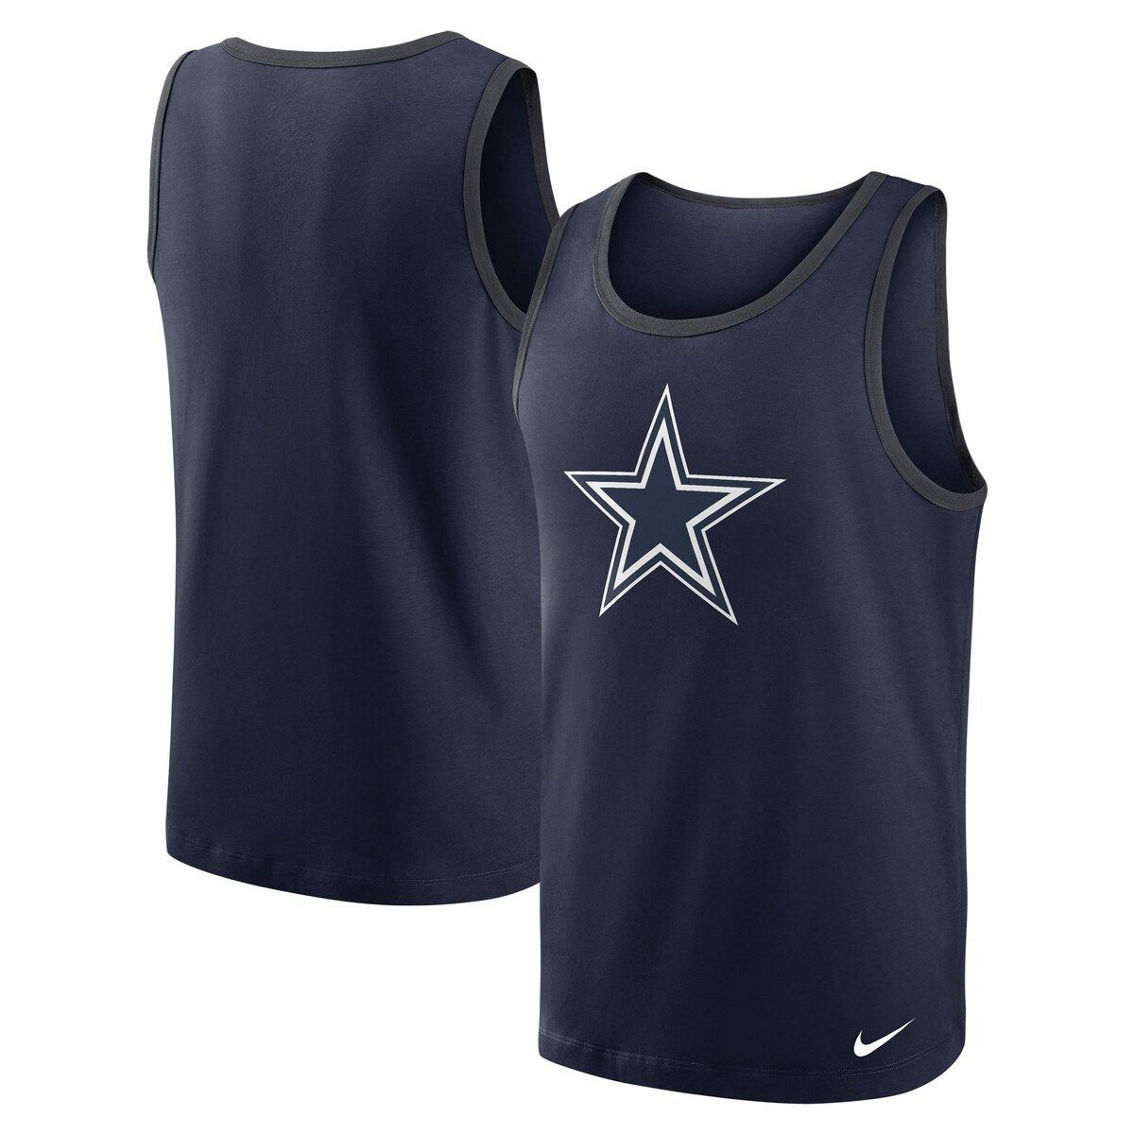 Nike Men's Navy Dallas Cowboys Tri-Blend Tank Top - Image 2 of 4